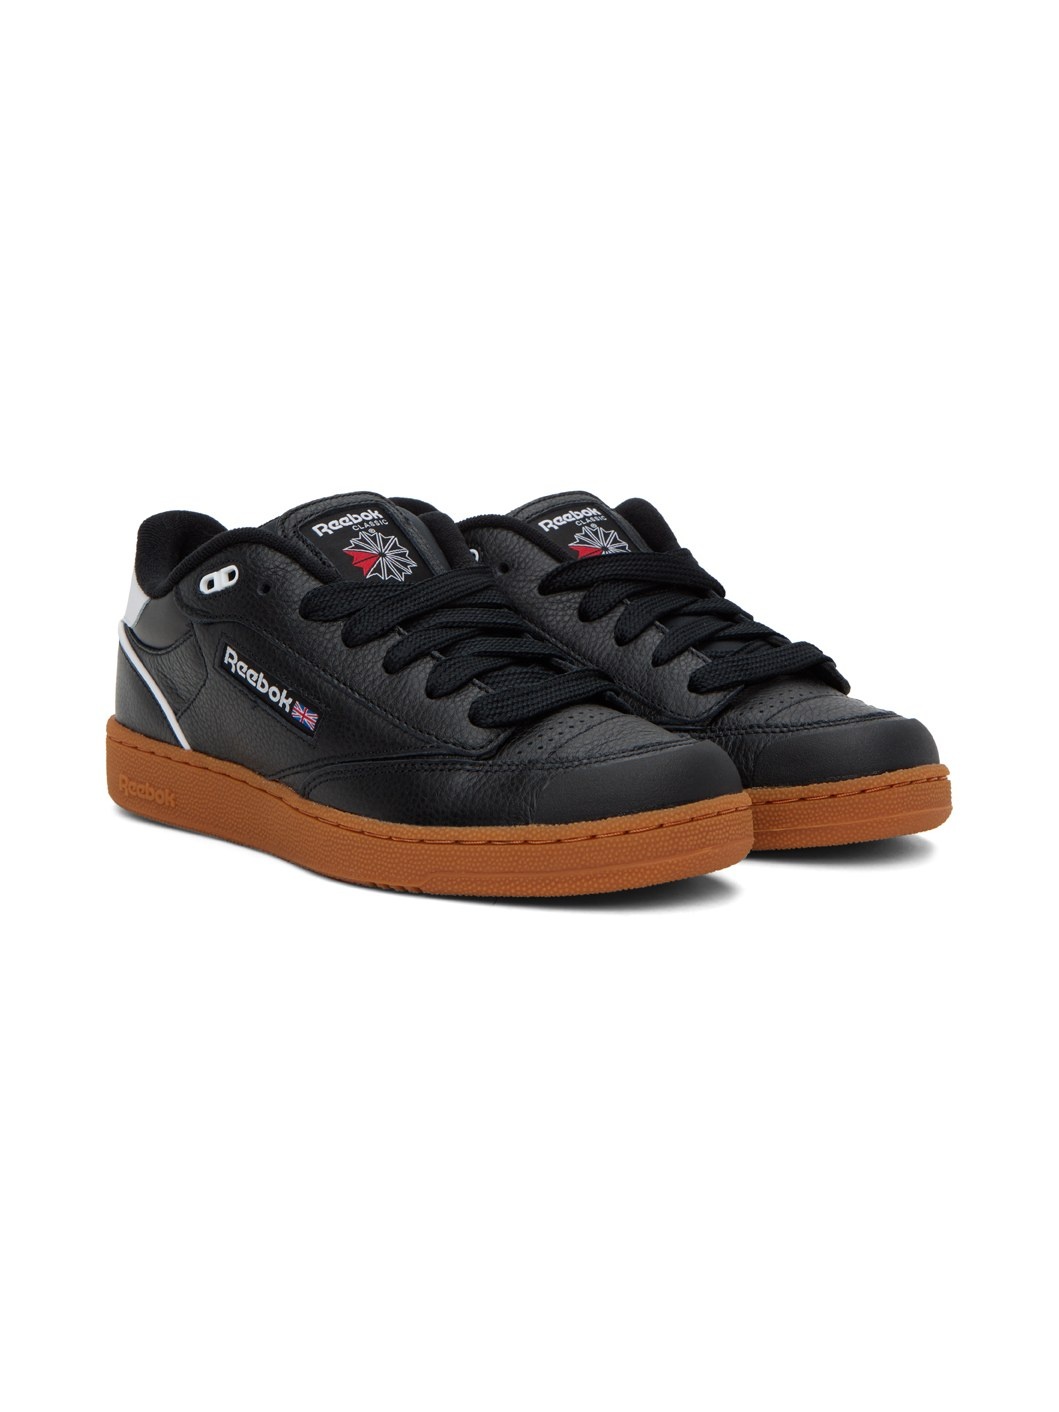 Black Club C Bulc Sneakers - 4